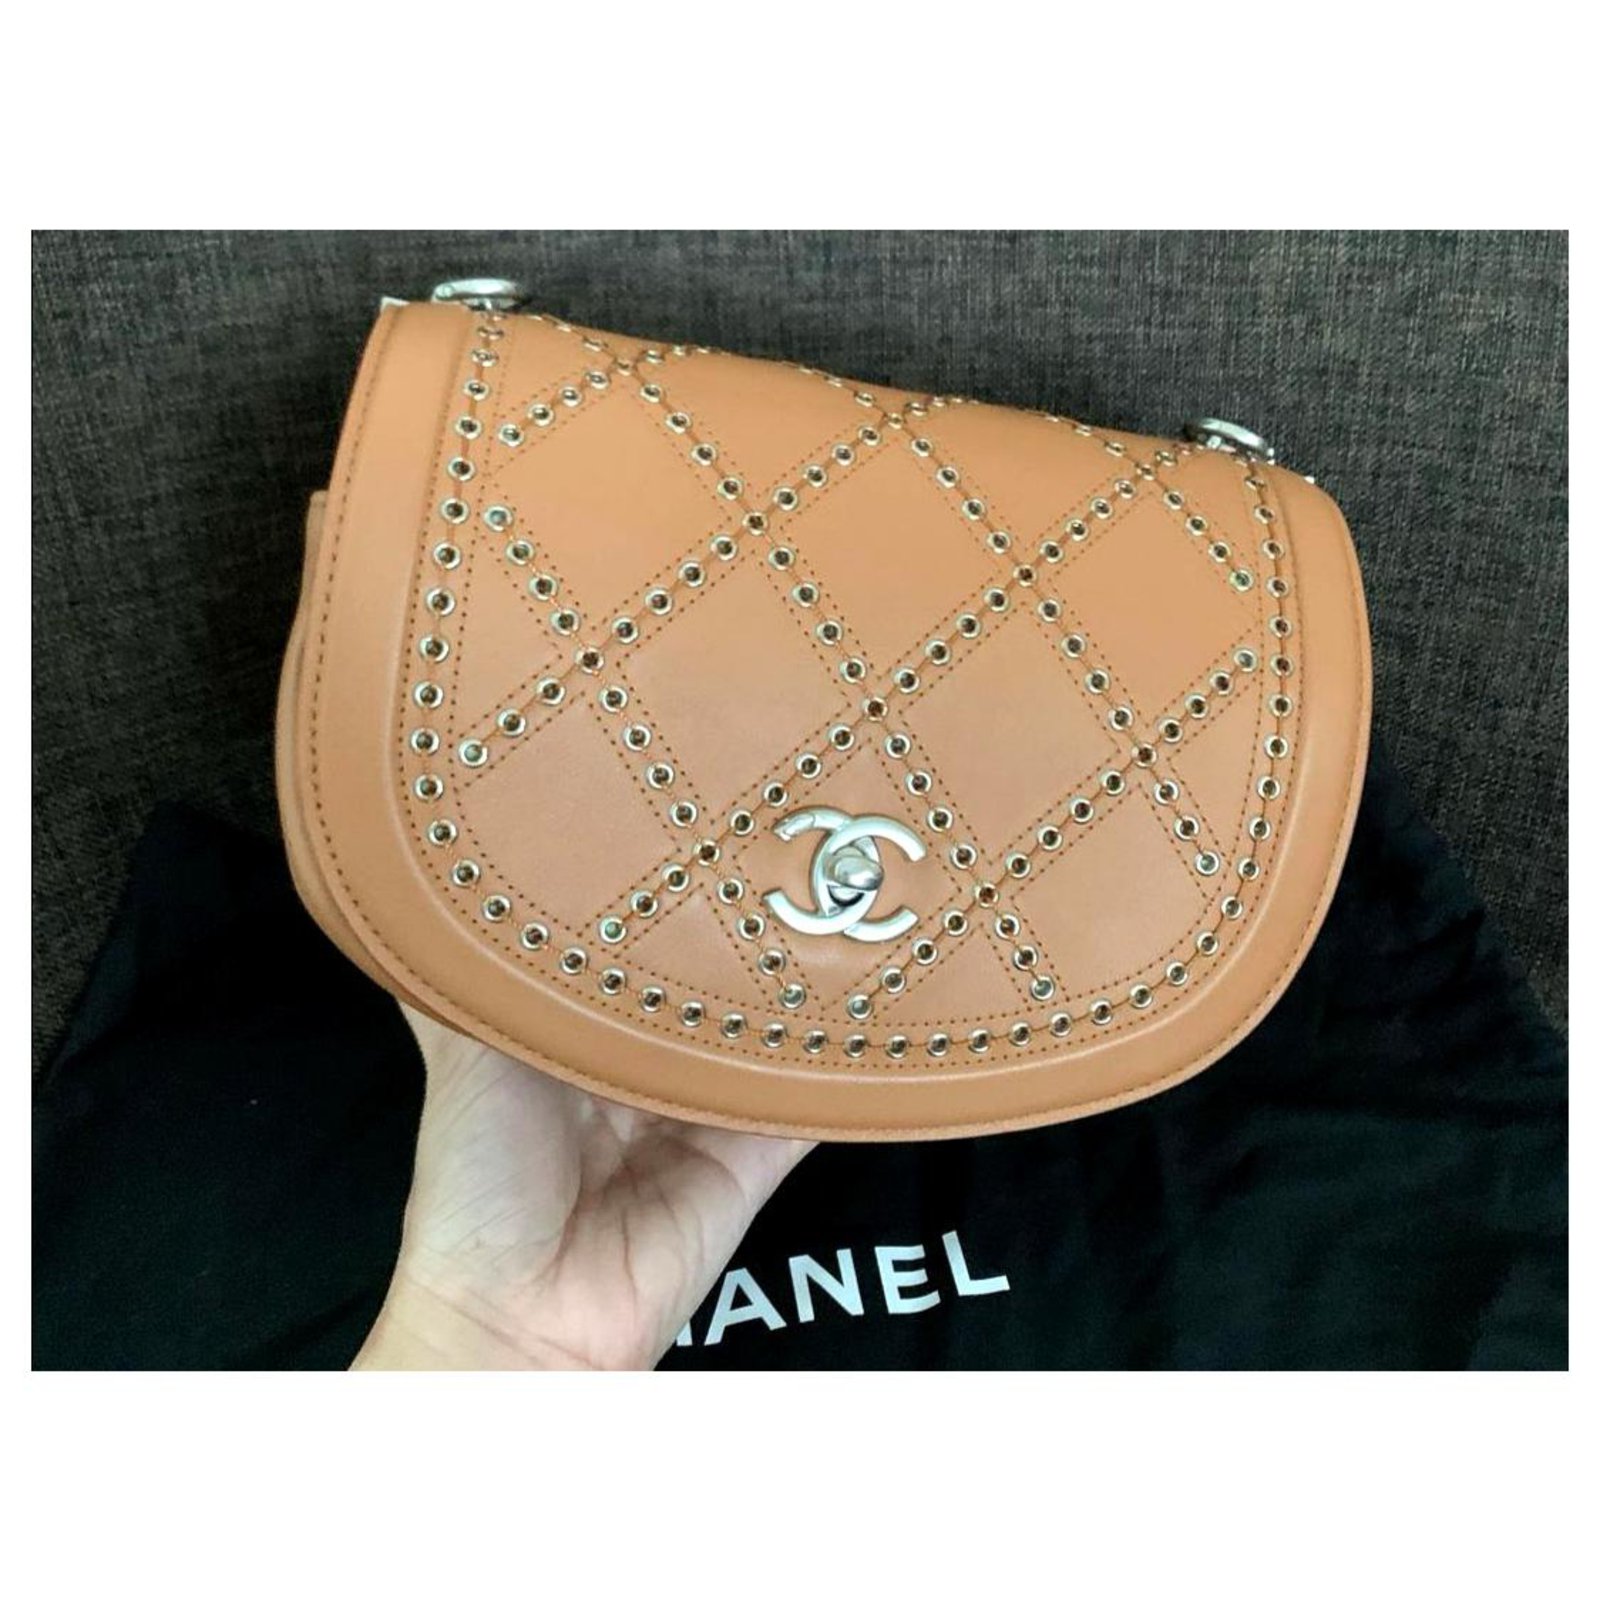 Chanel Coco eyelet flap bag